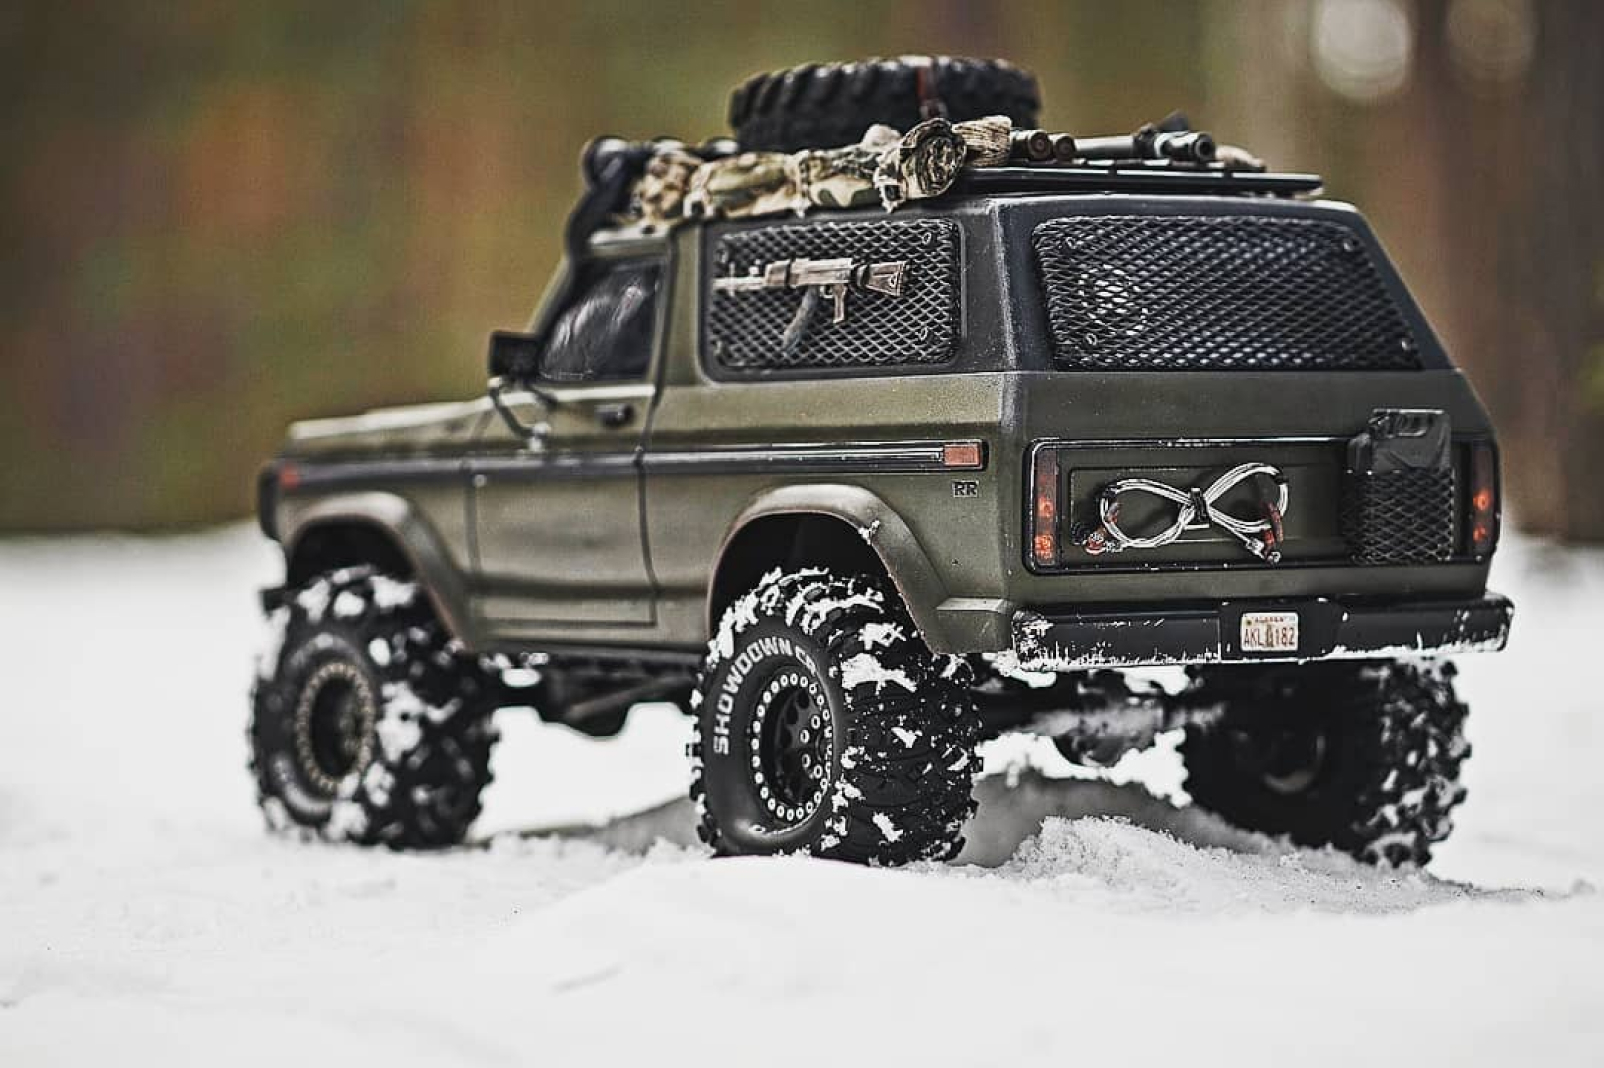 Custom 1/10 Bronco build by @explorer_rc